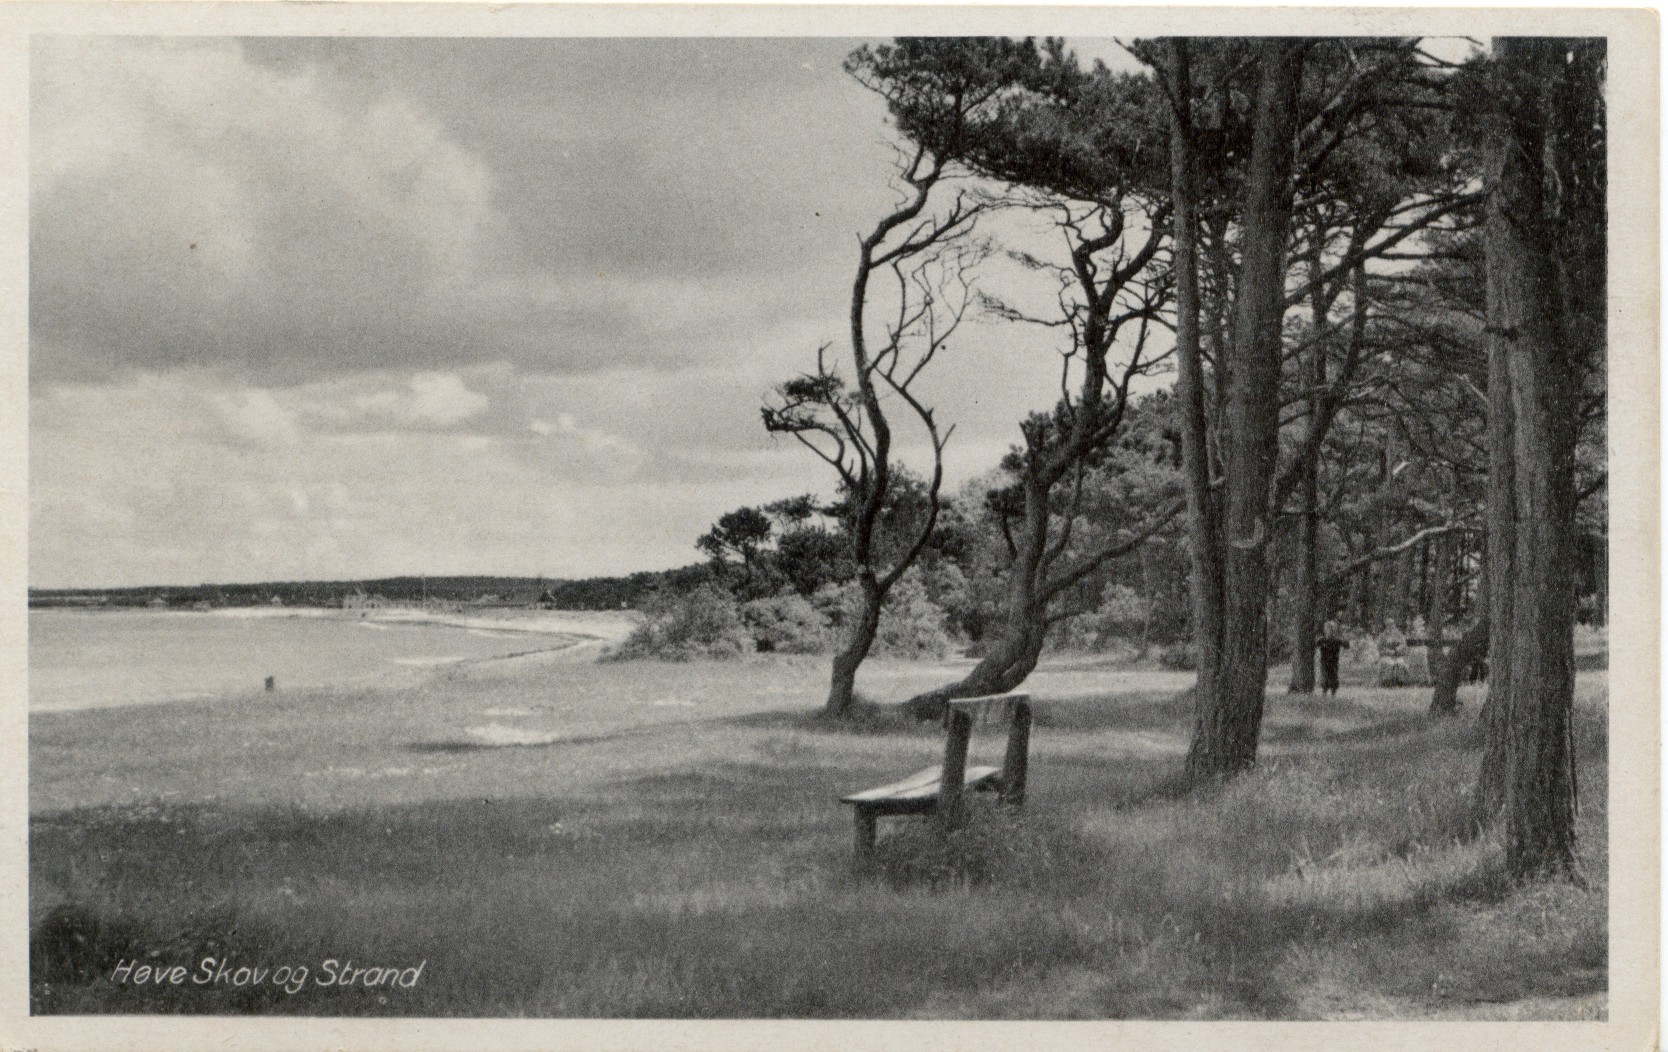 Ved Høve Strand, ca. 1940 (B1467)